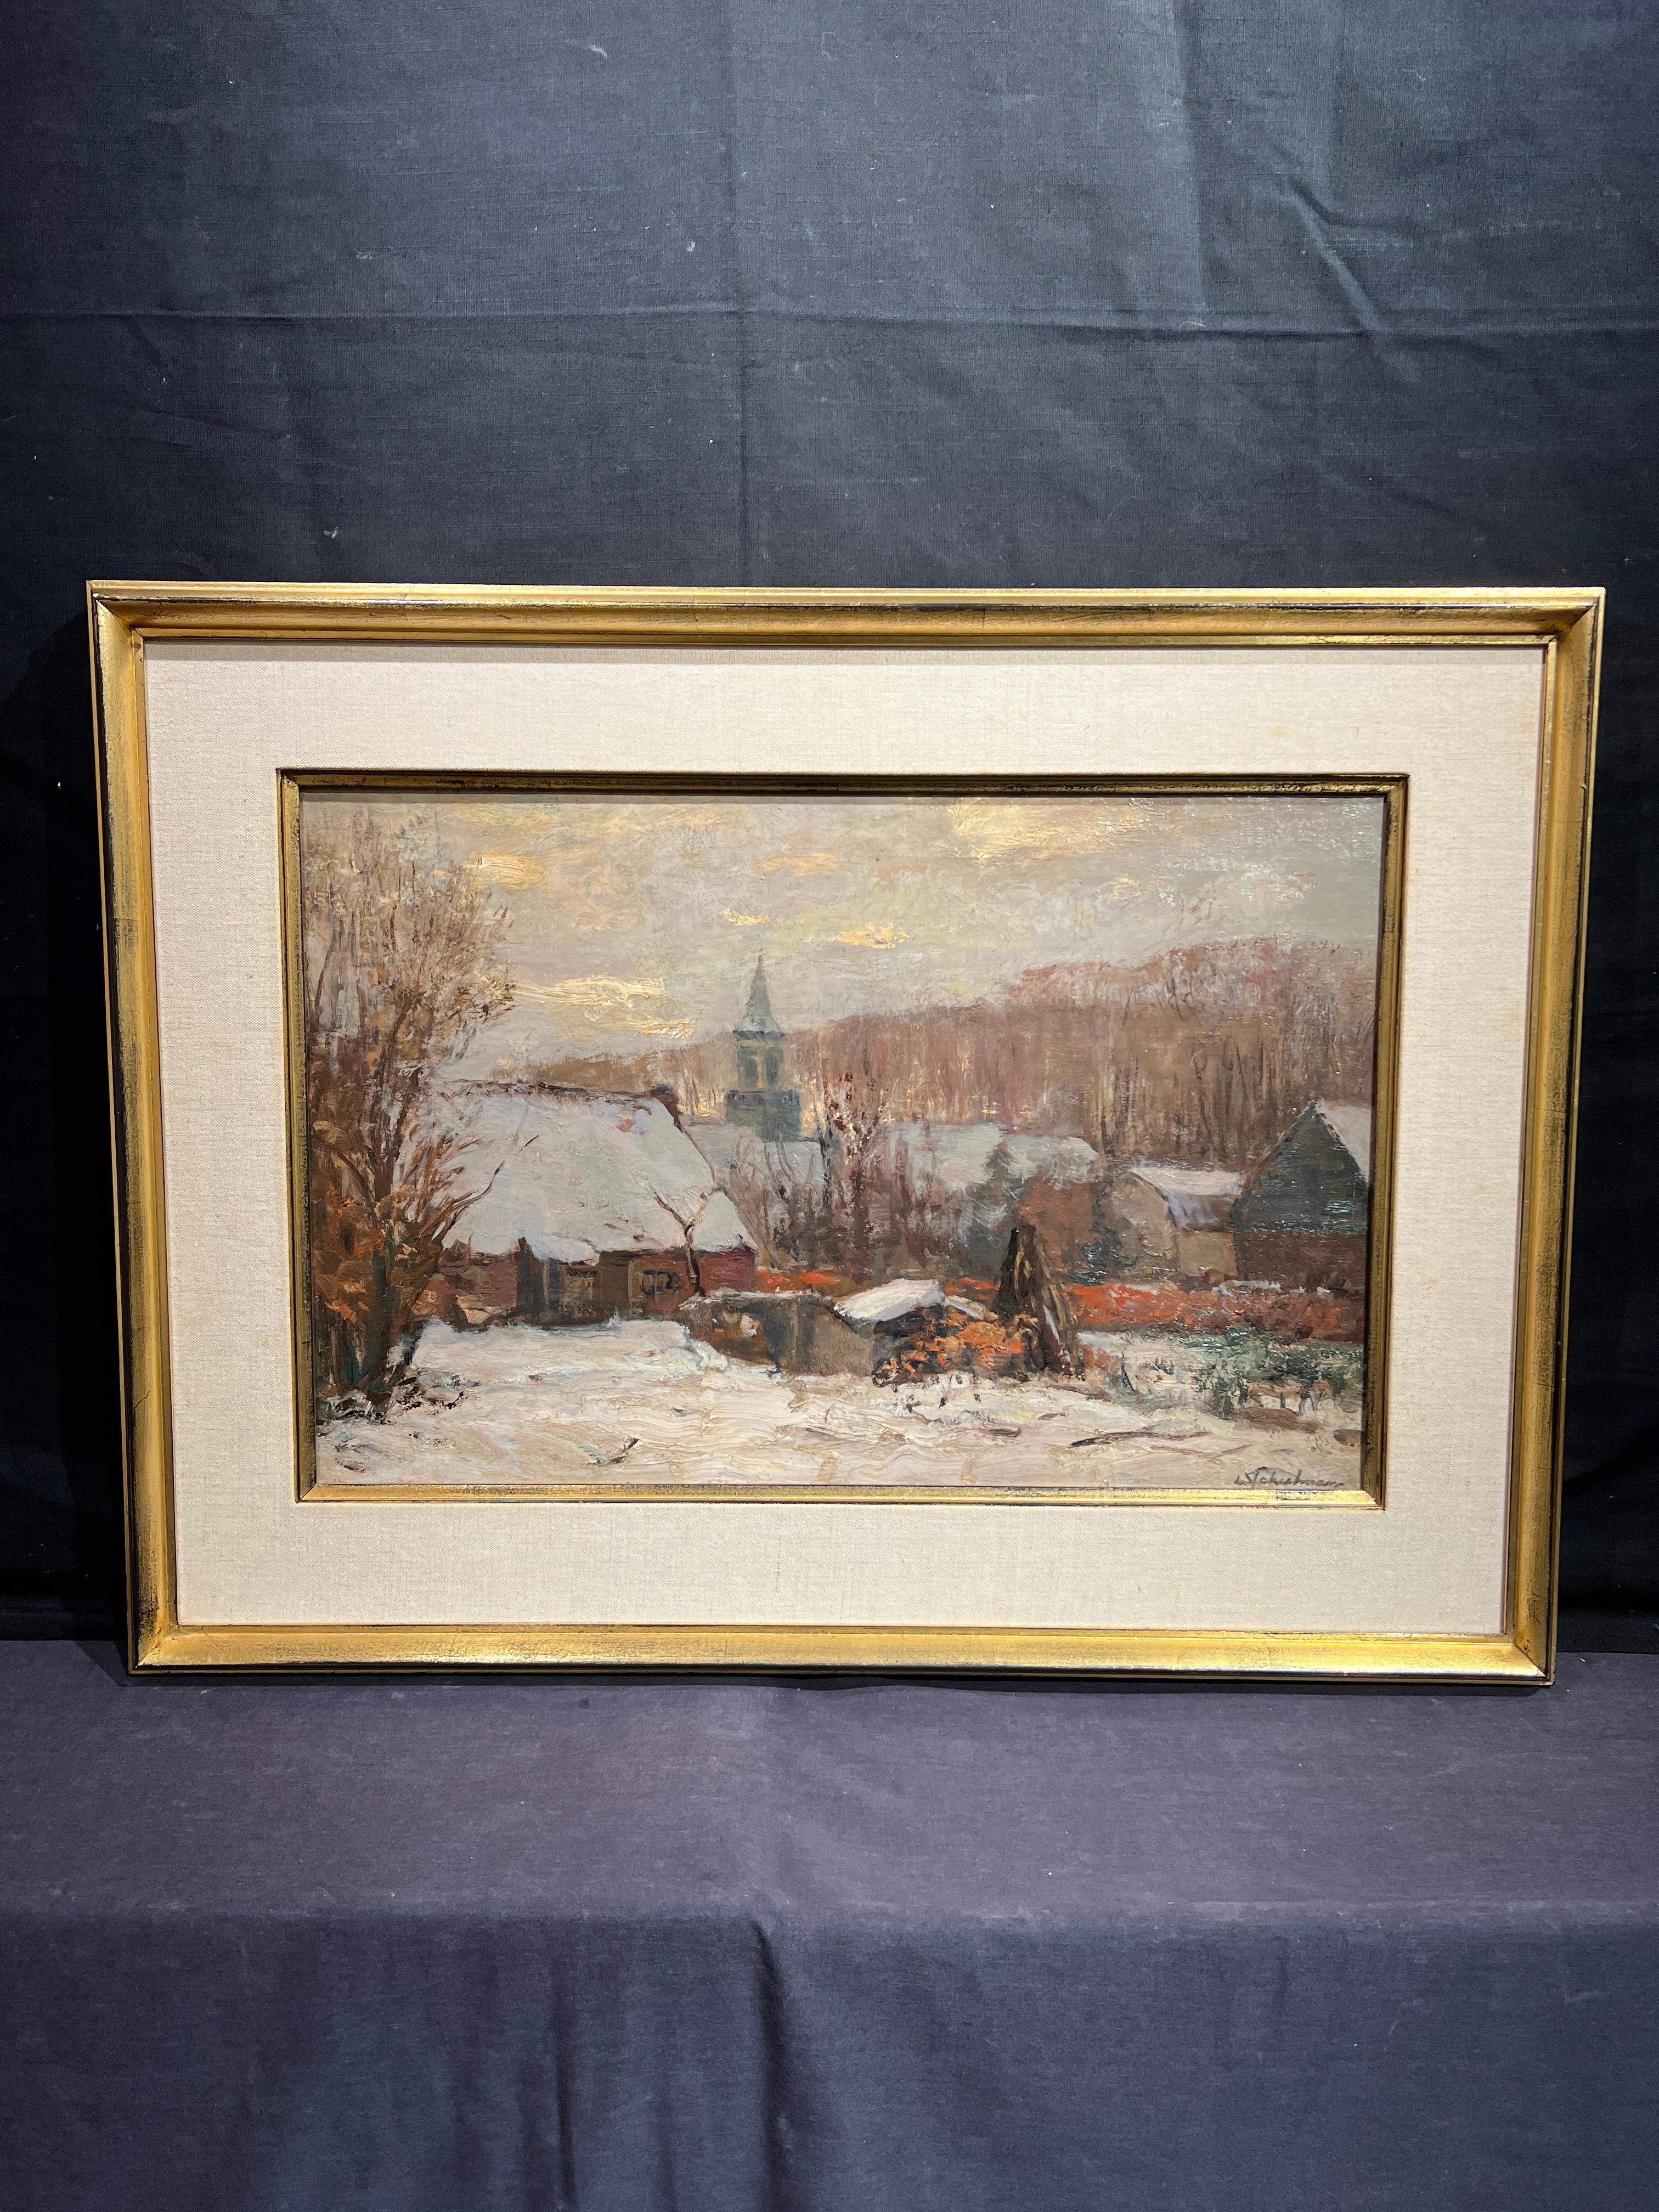 Village Under the Snow
By. David Schulman (Dutch, 1881-1966)
Signed Lower Right
Unframed: 15.5